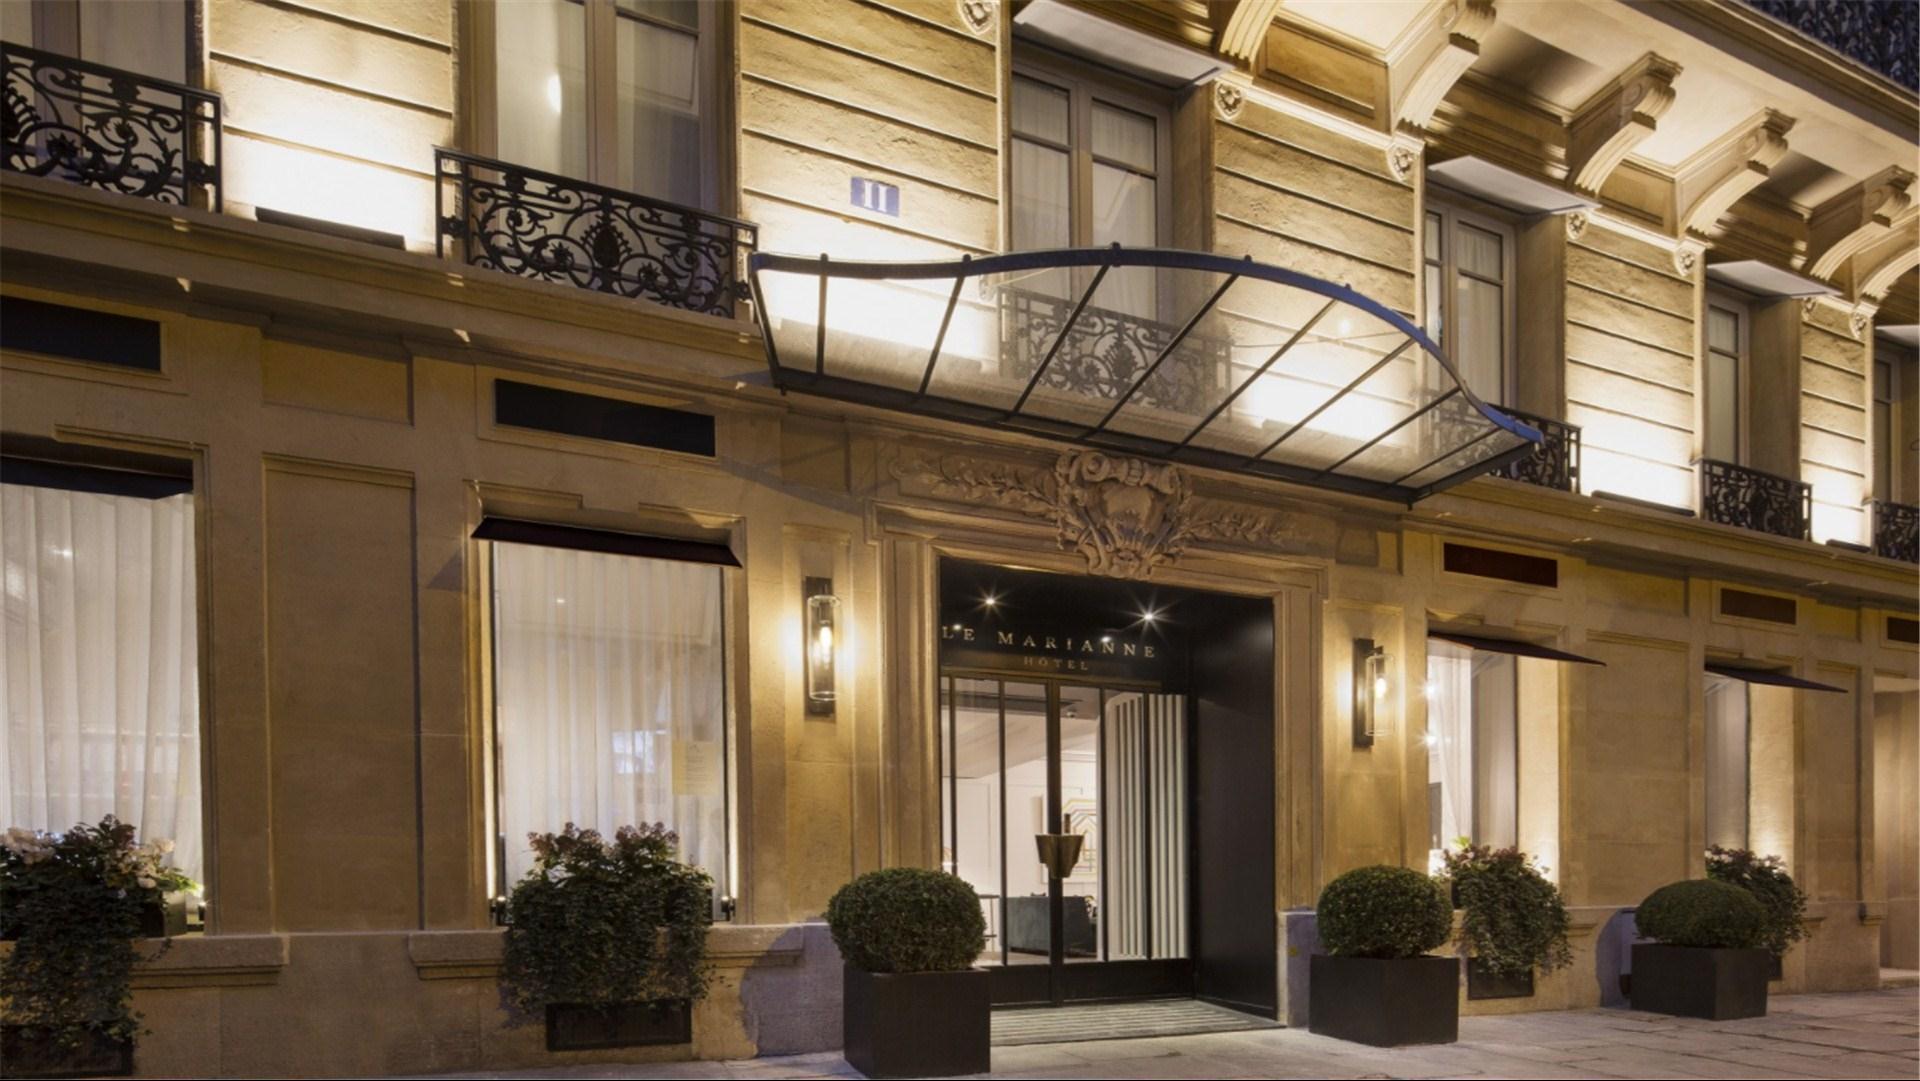 Hotel Le Marianne in Paris, FR